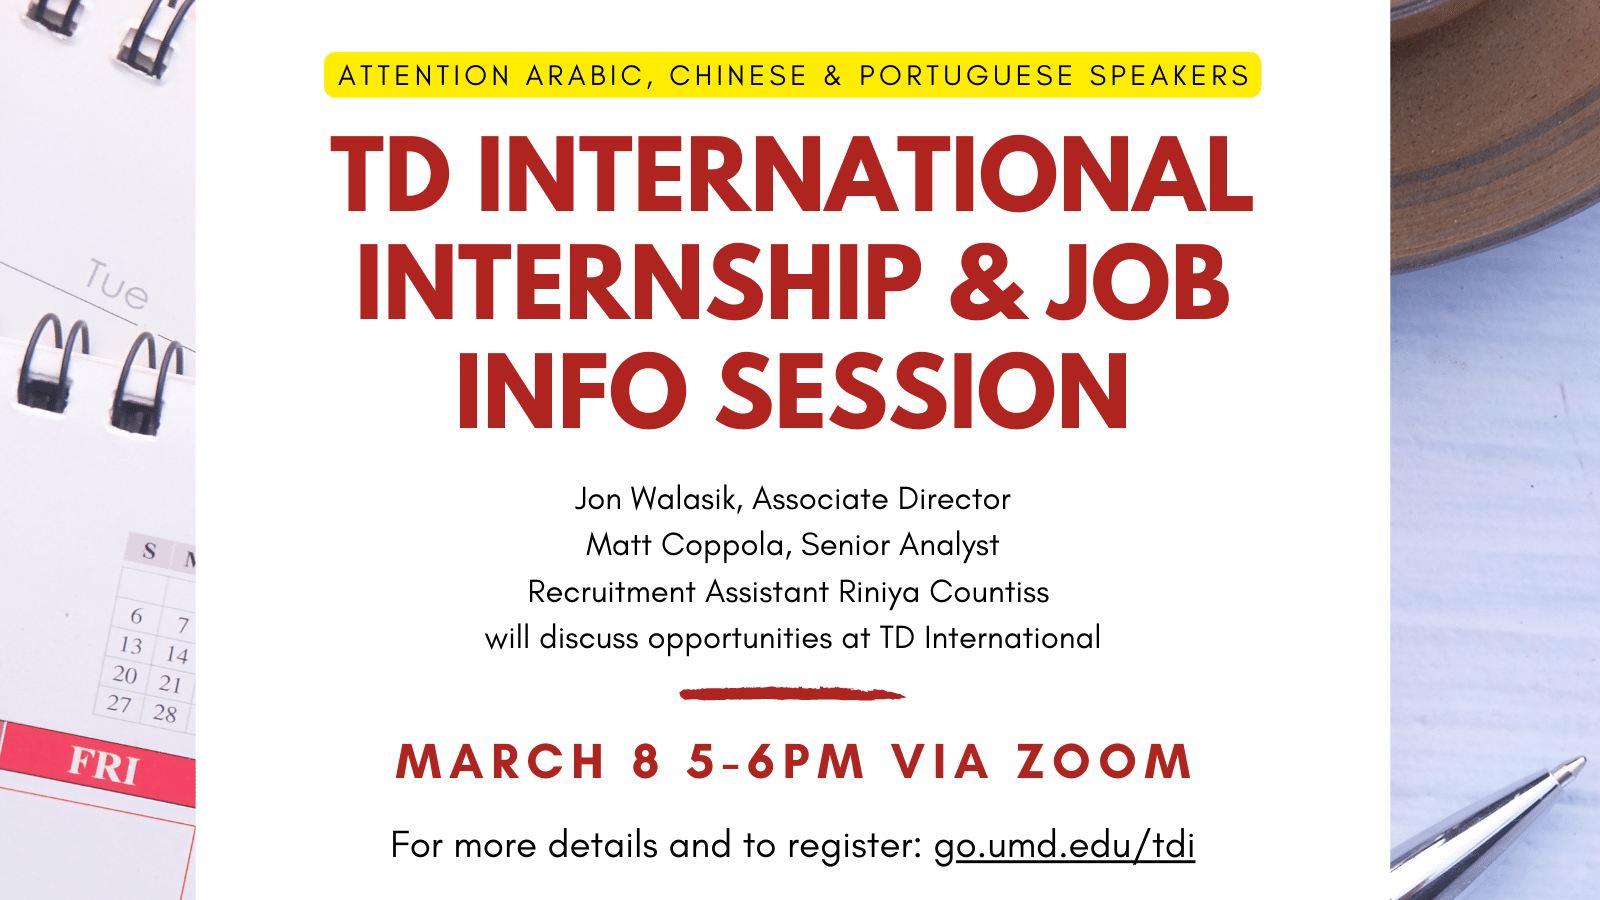 TD International internship & job info session March 8 5-6pm